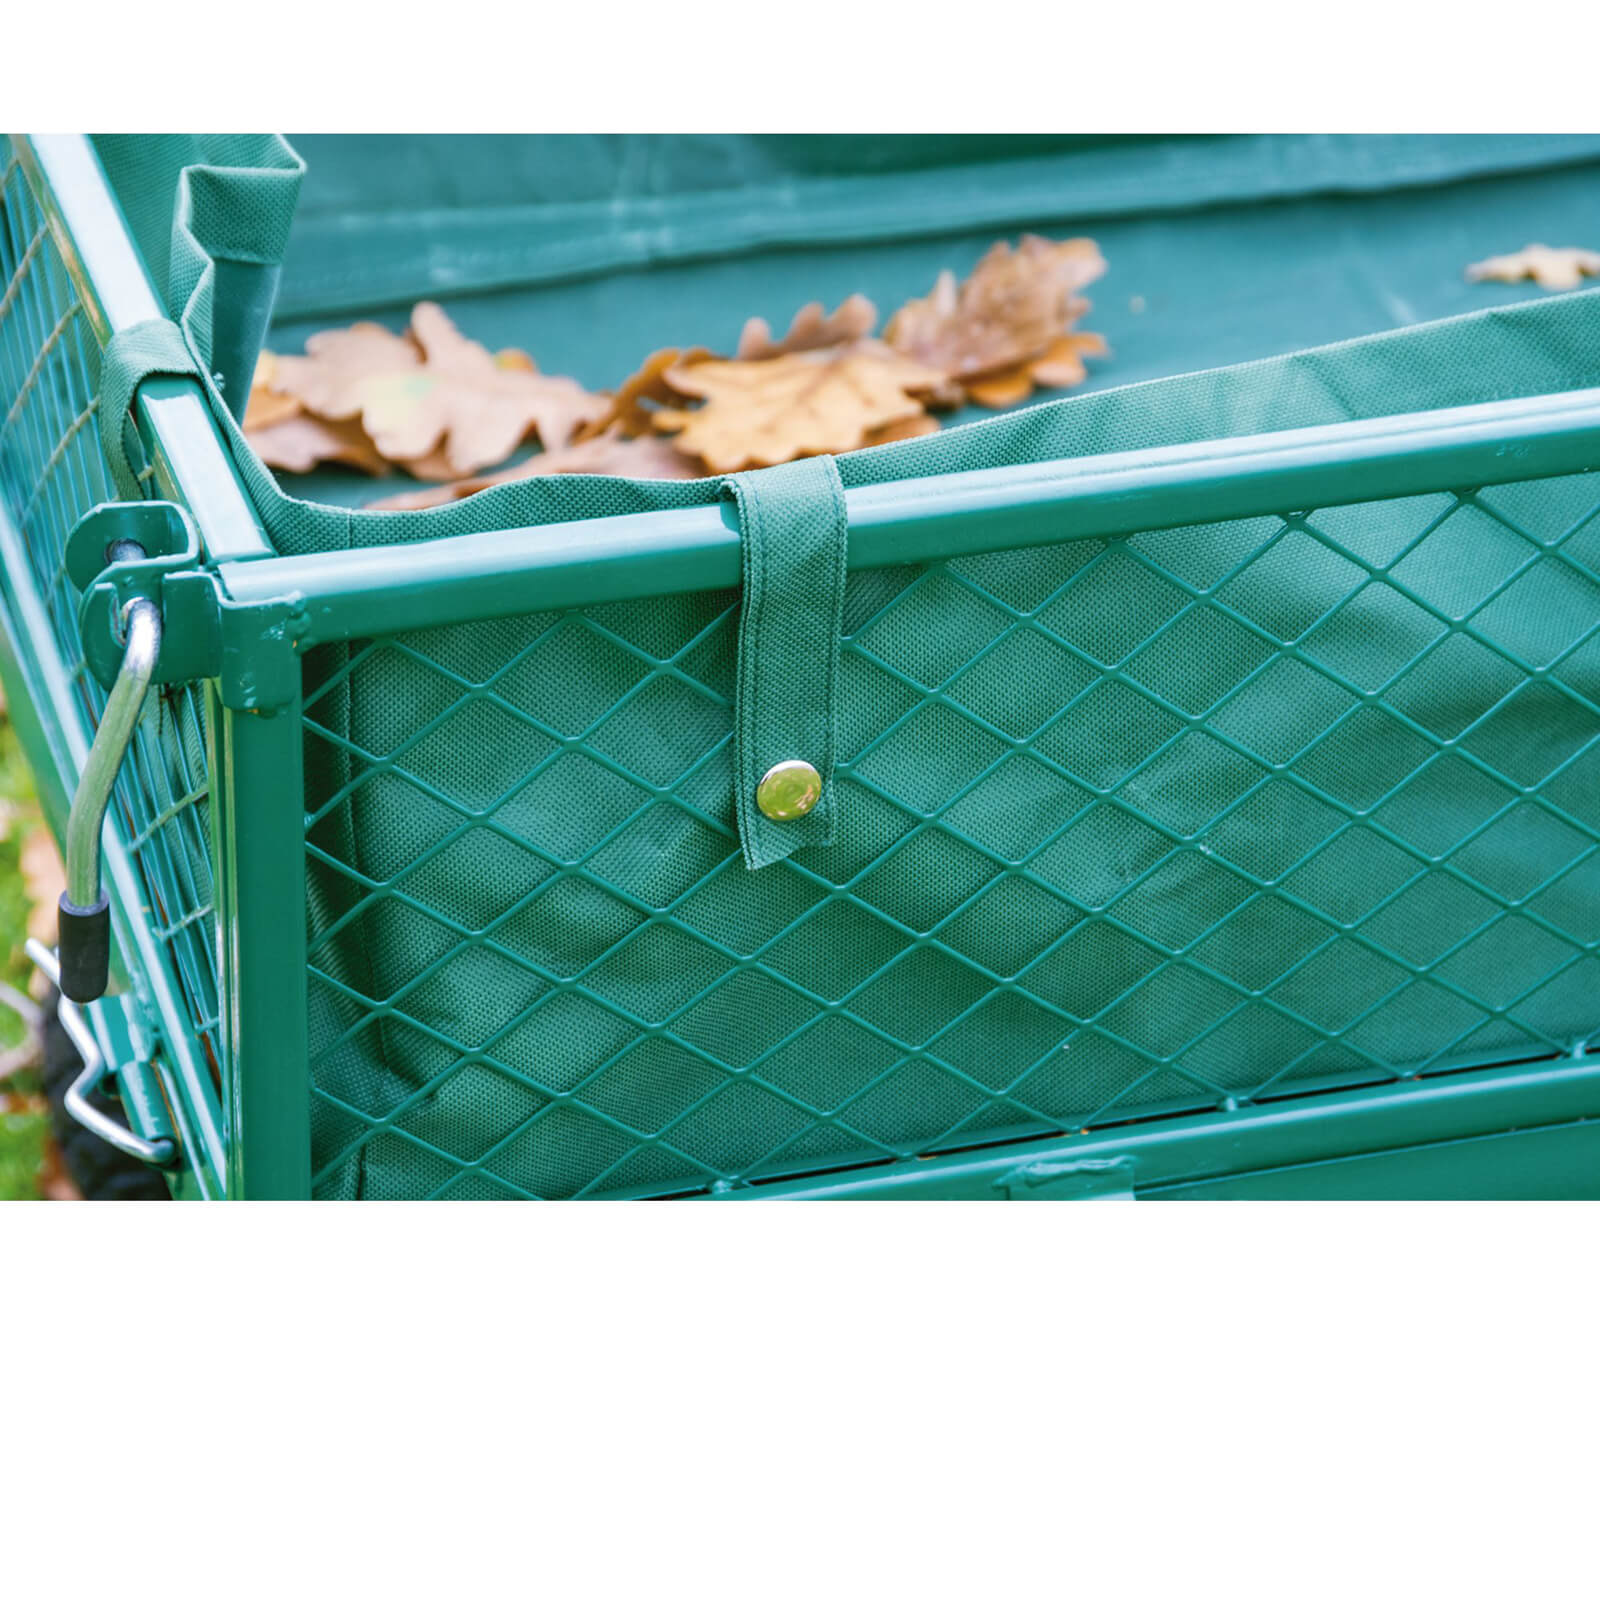 Image of Draper A Liner For Stock No. 58552 Steel Mesh Gardeners Cart